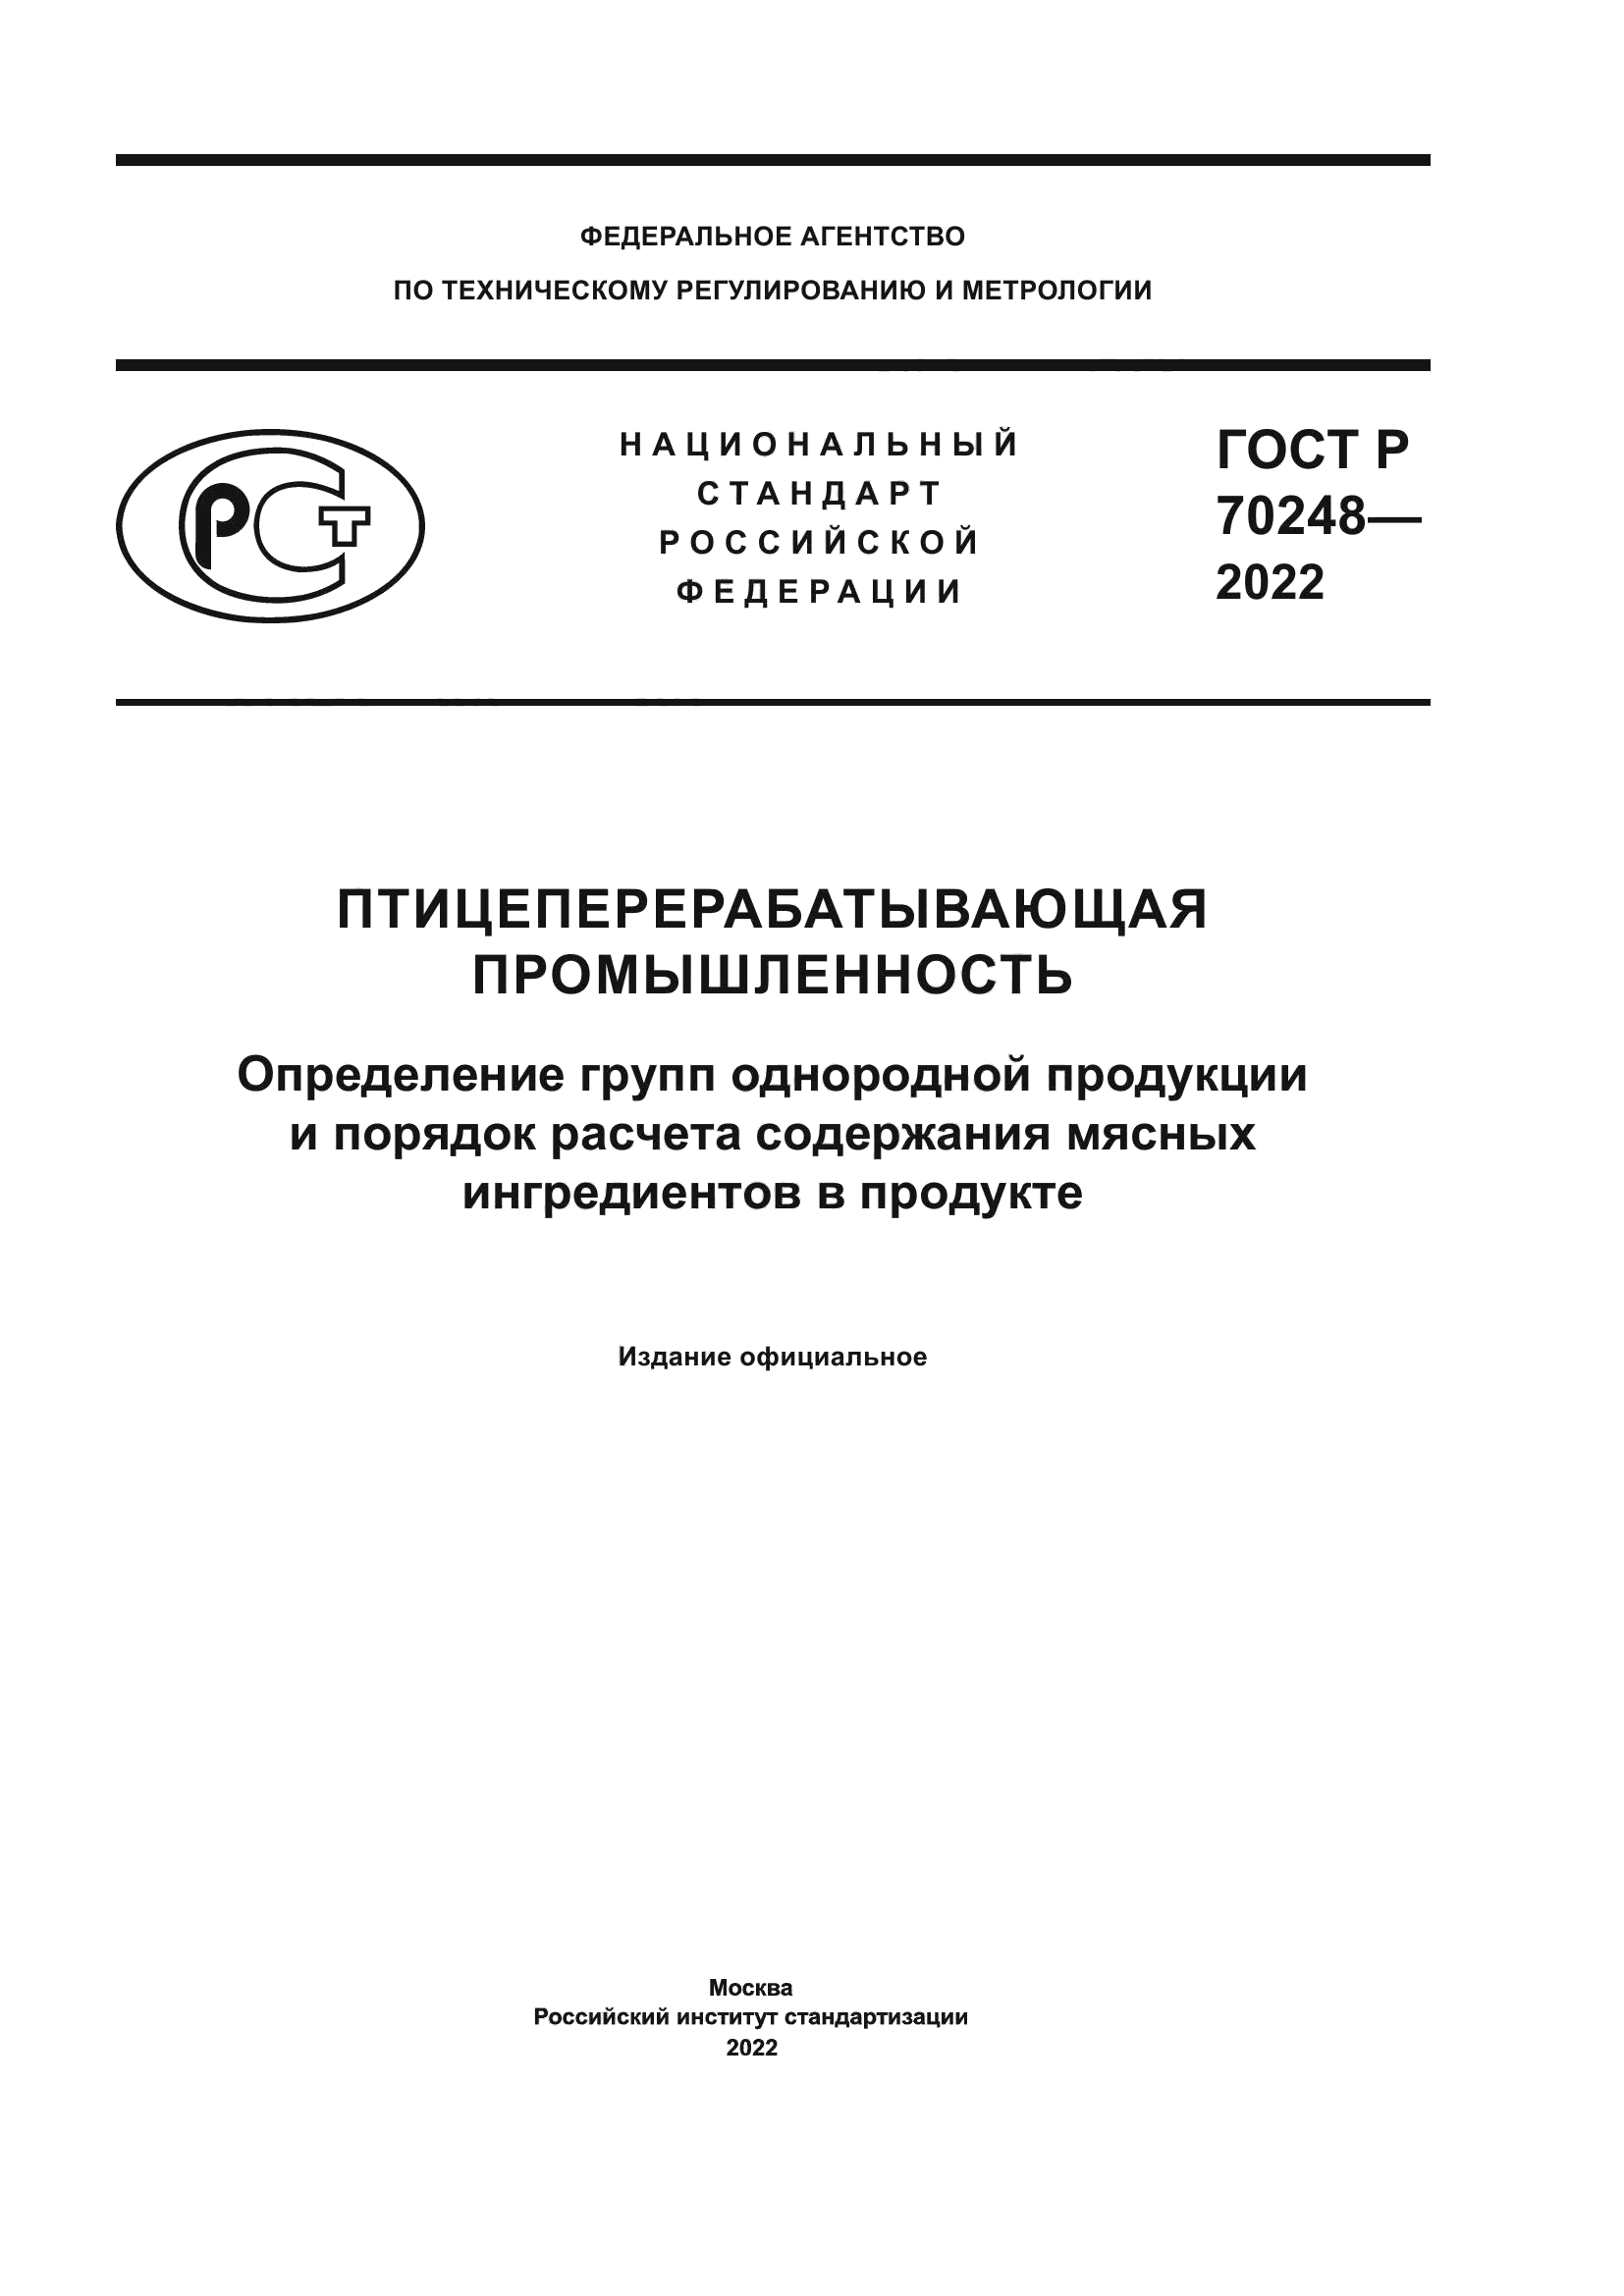 ГОСТ Р 70248-2022